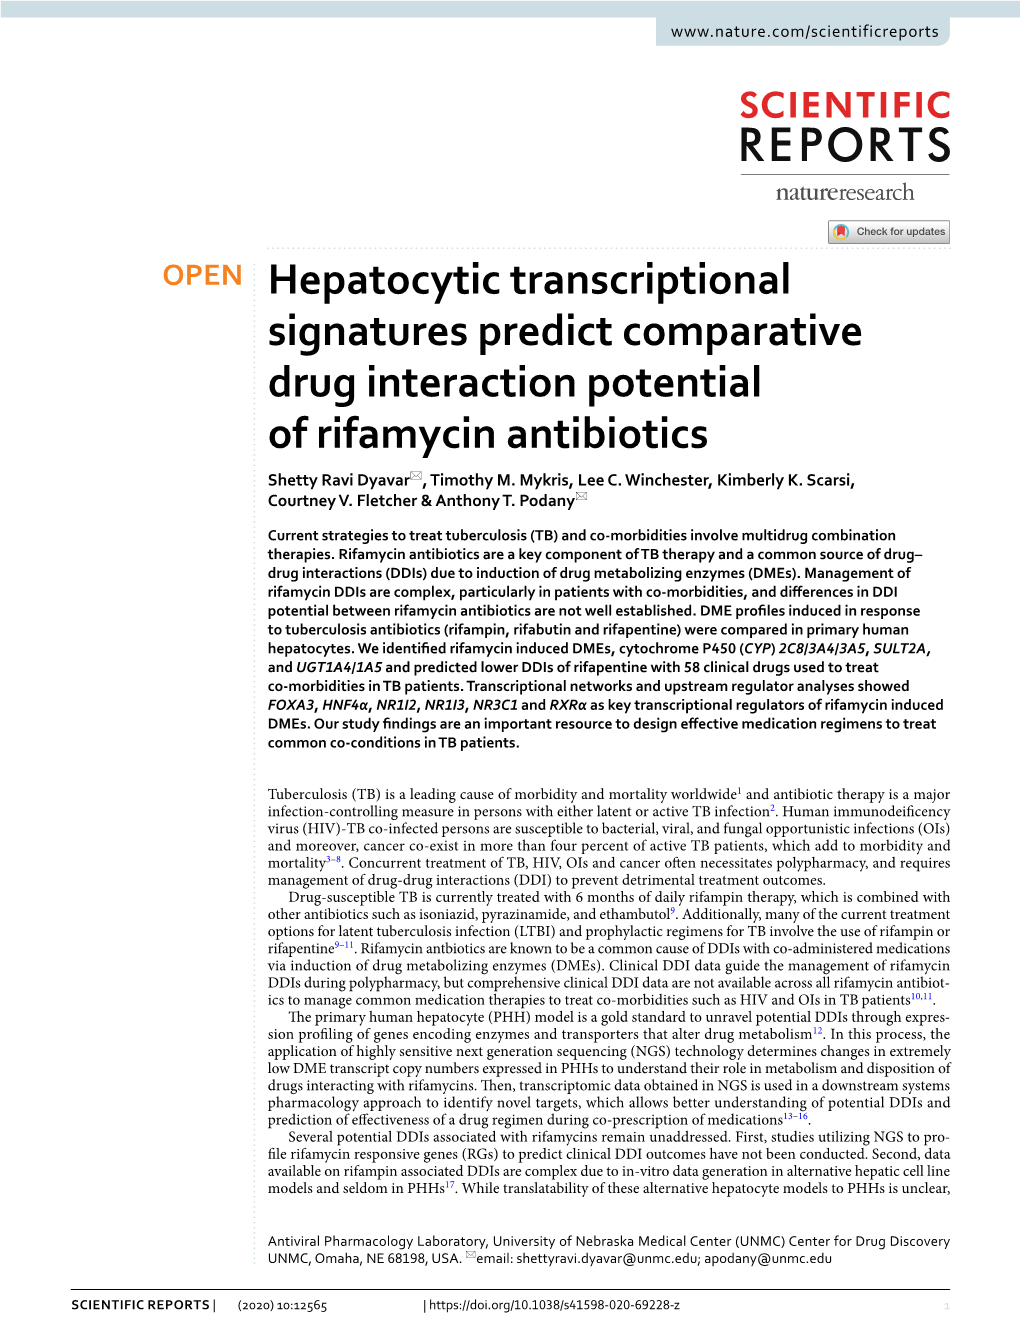 Hepatocytic Transcriptional Signatures Predict Comparative Drug Interaction Potential of Rifamycin Antibiotics Shetty Ravi Dyavar*, Timothy M